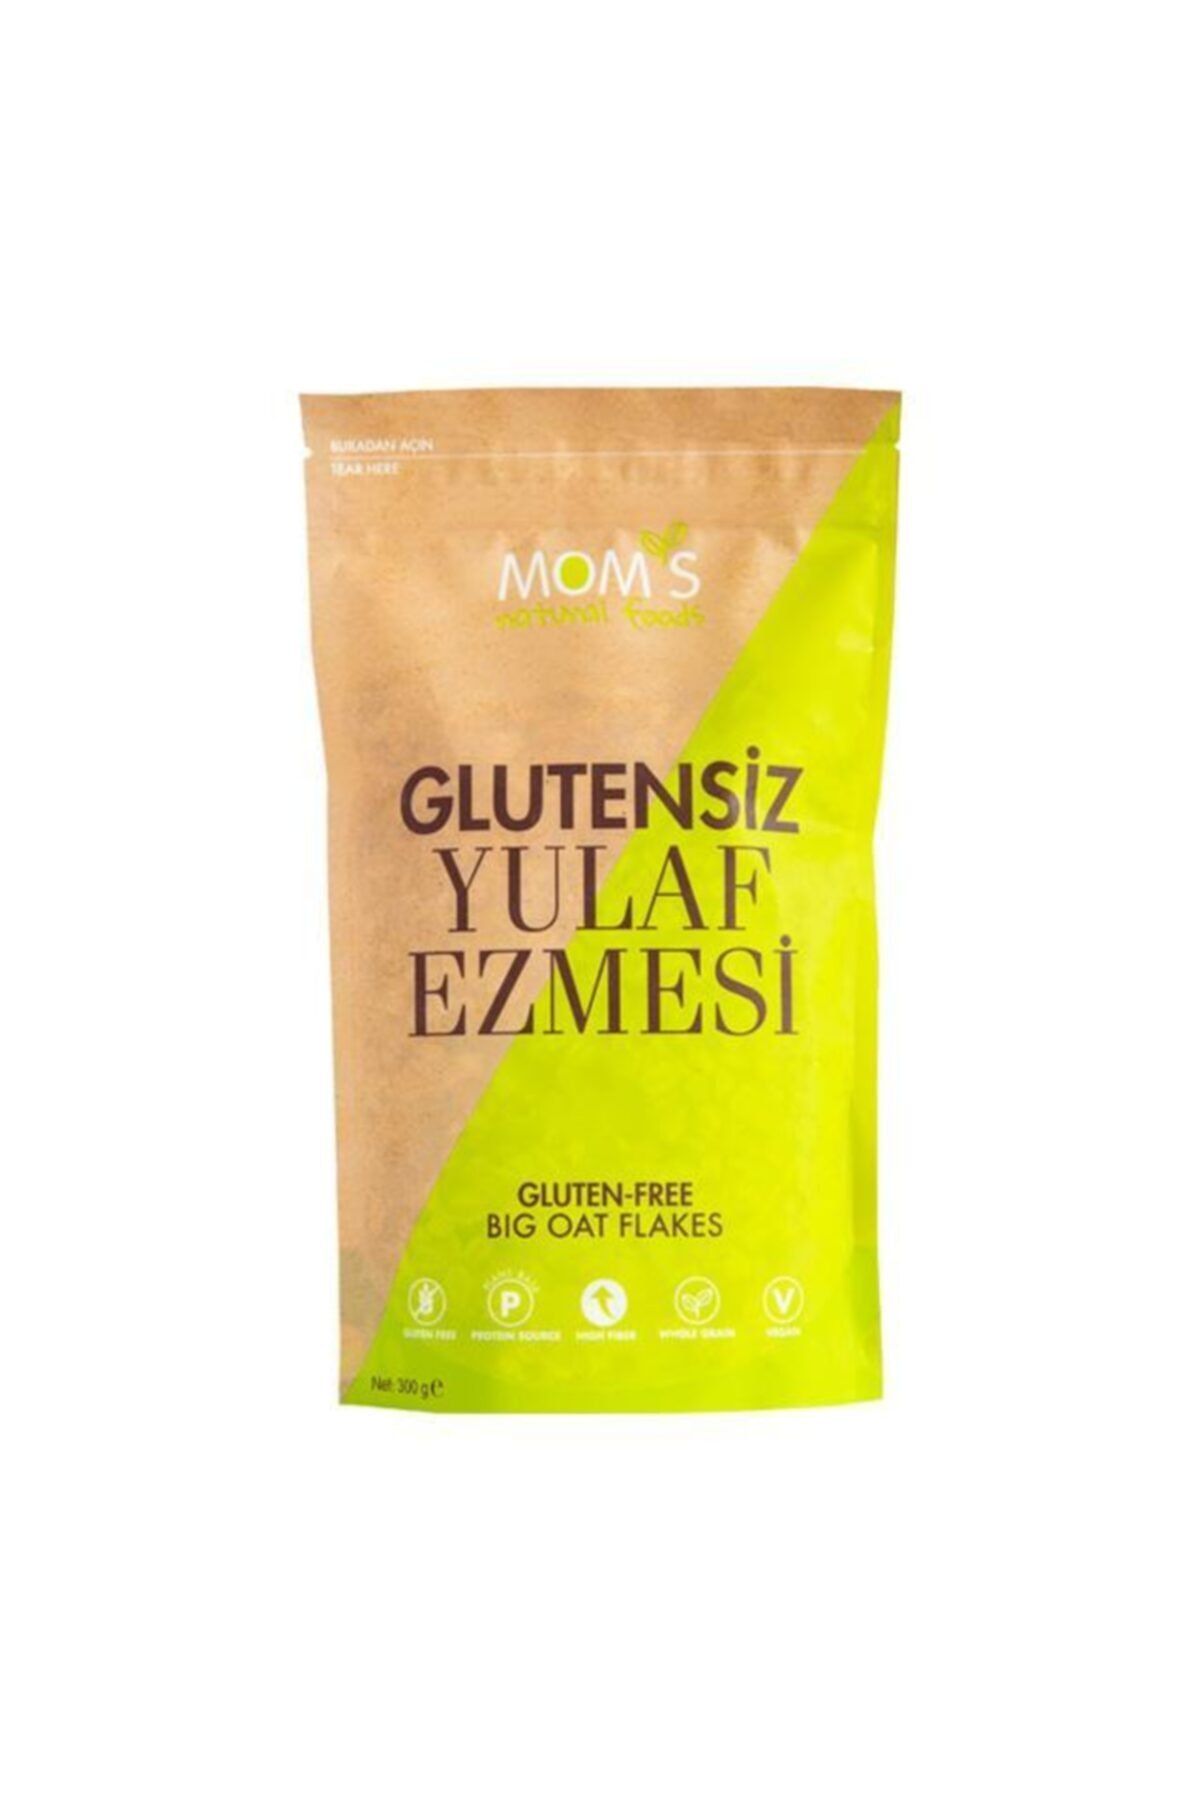 Mom's Natural Foods Mom's Glutensiz Yulaf Ezmesi 300gr